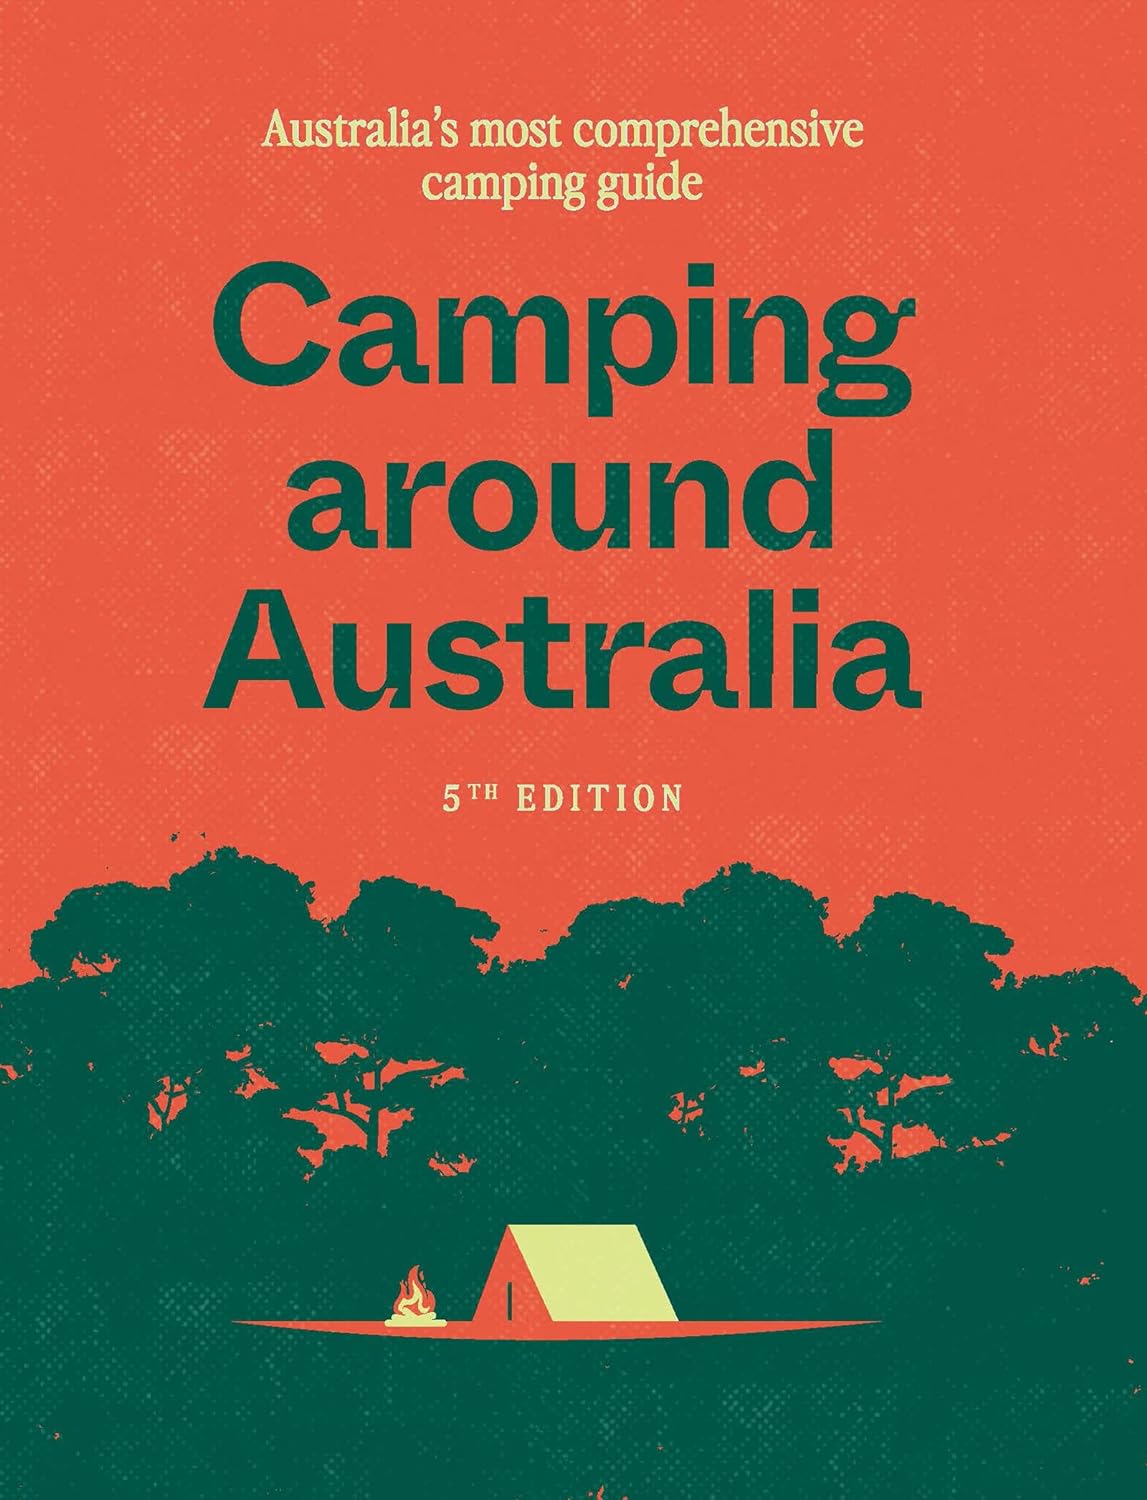 Camping around Australia